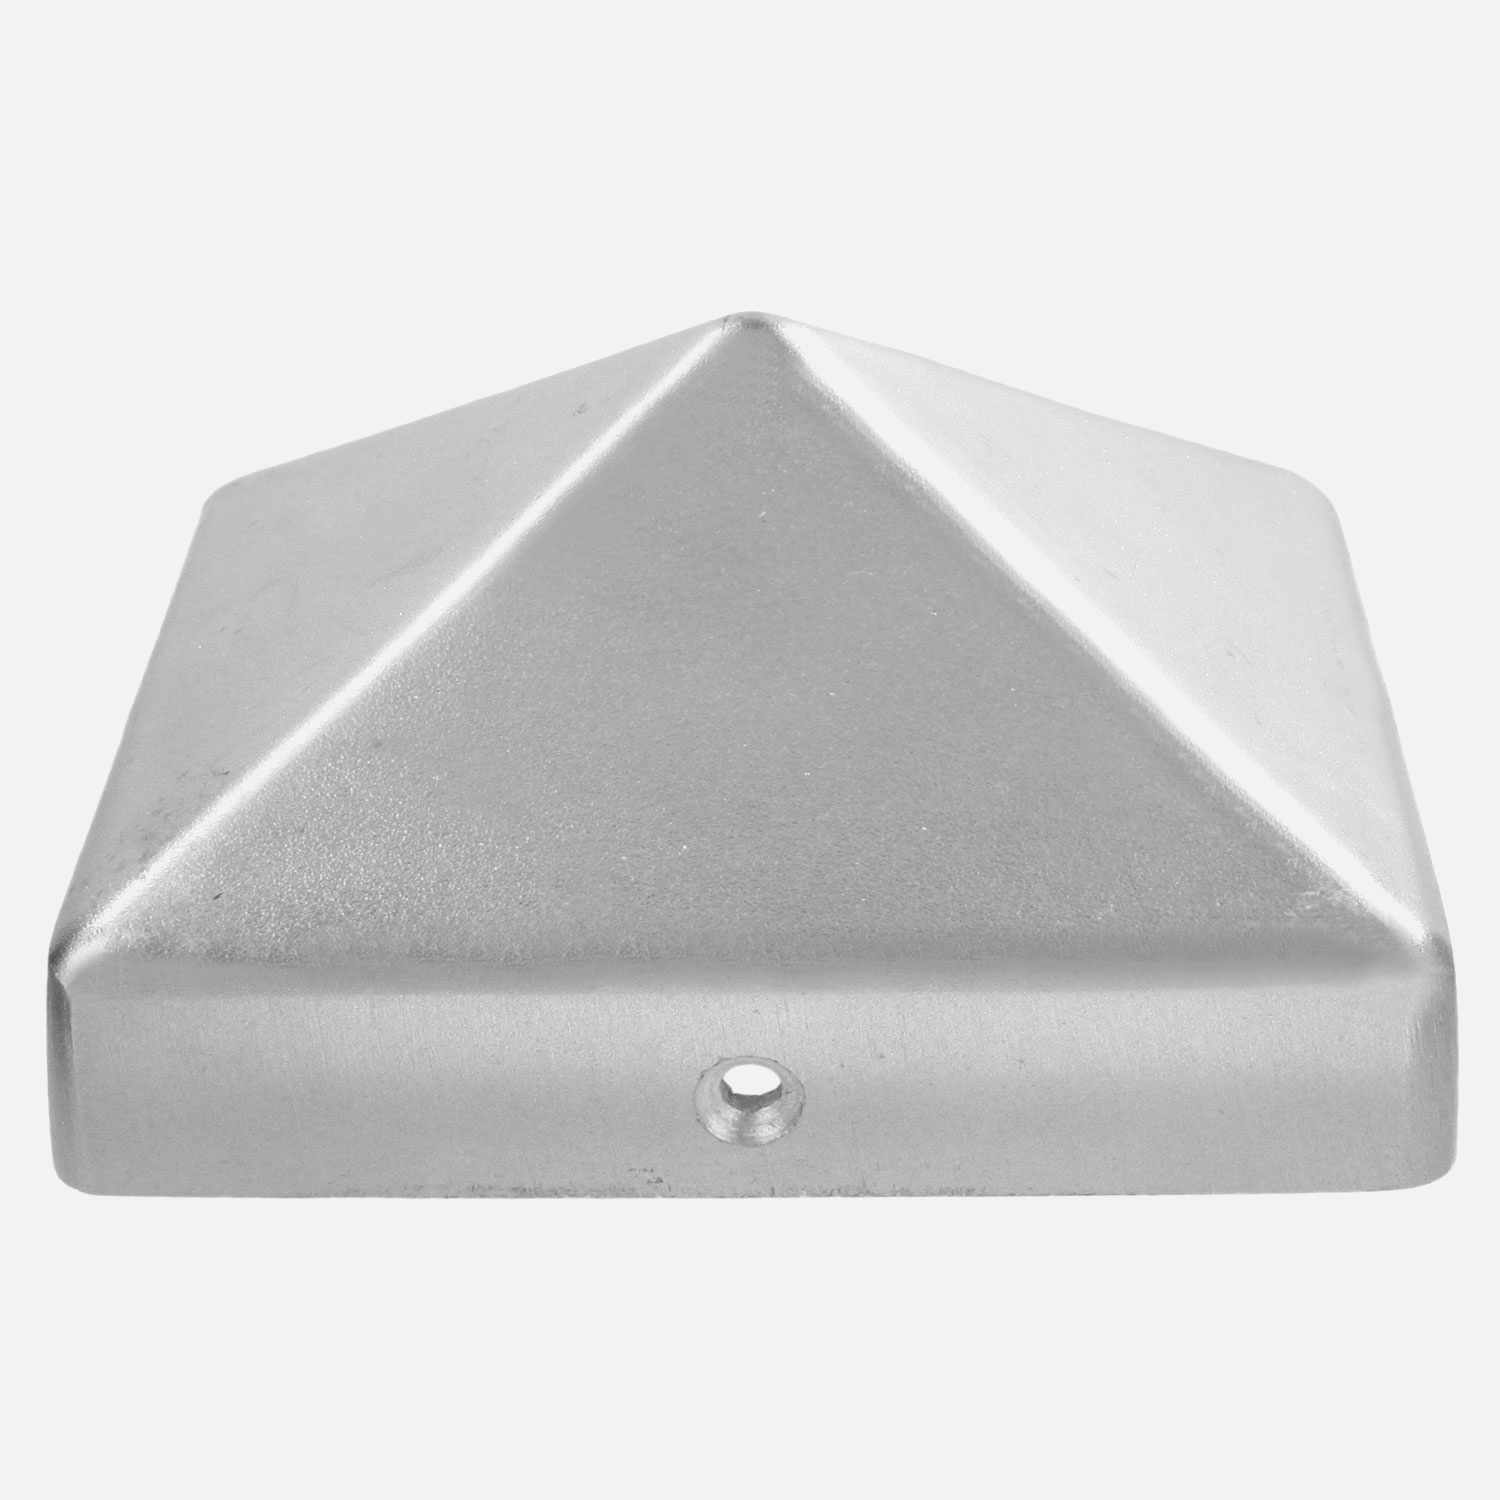 1 Alberts Pfostenkappe hohe Form Aluminiumguss blank 111x111 mm